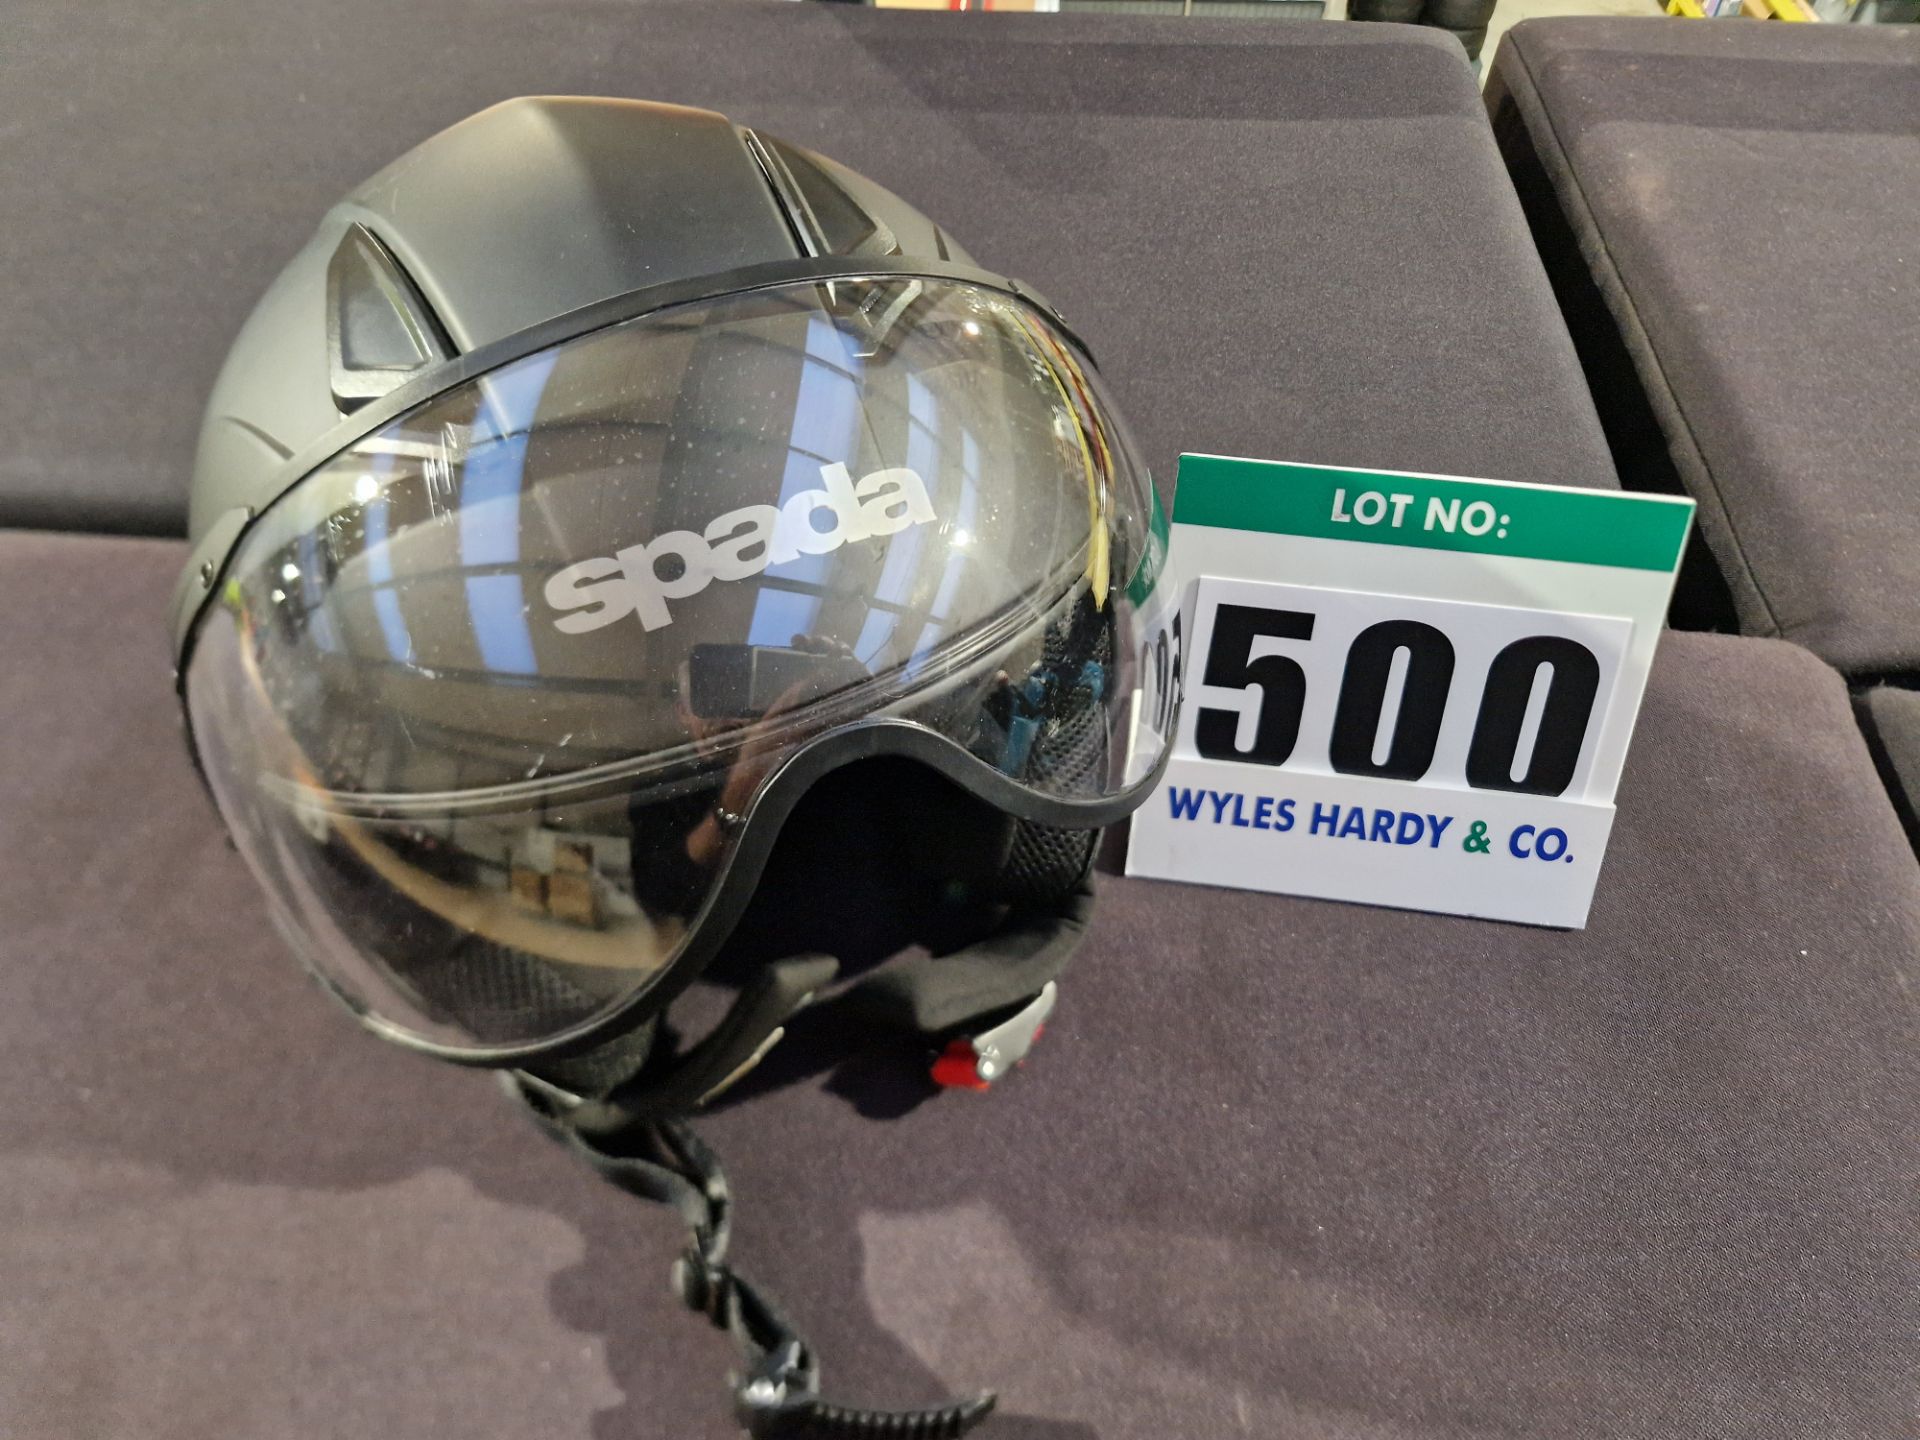 A SPADA Open Face Helmet with Drop Down Visor, Size M (57-58cm), ECE R22-5